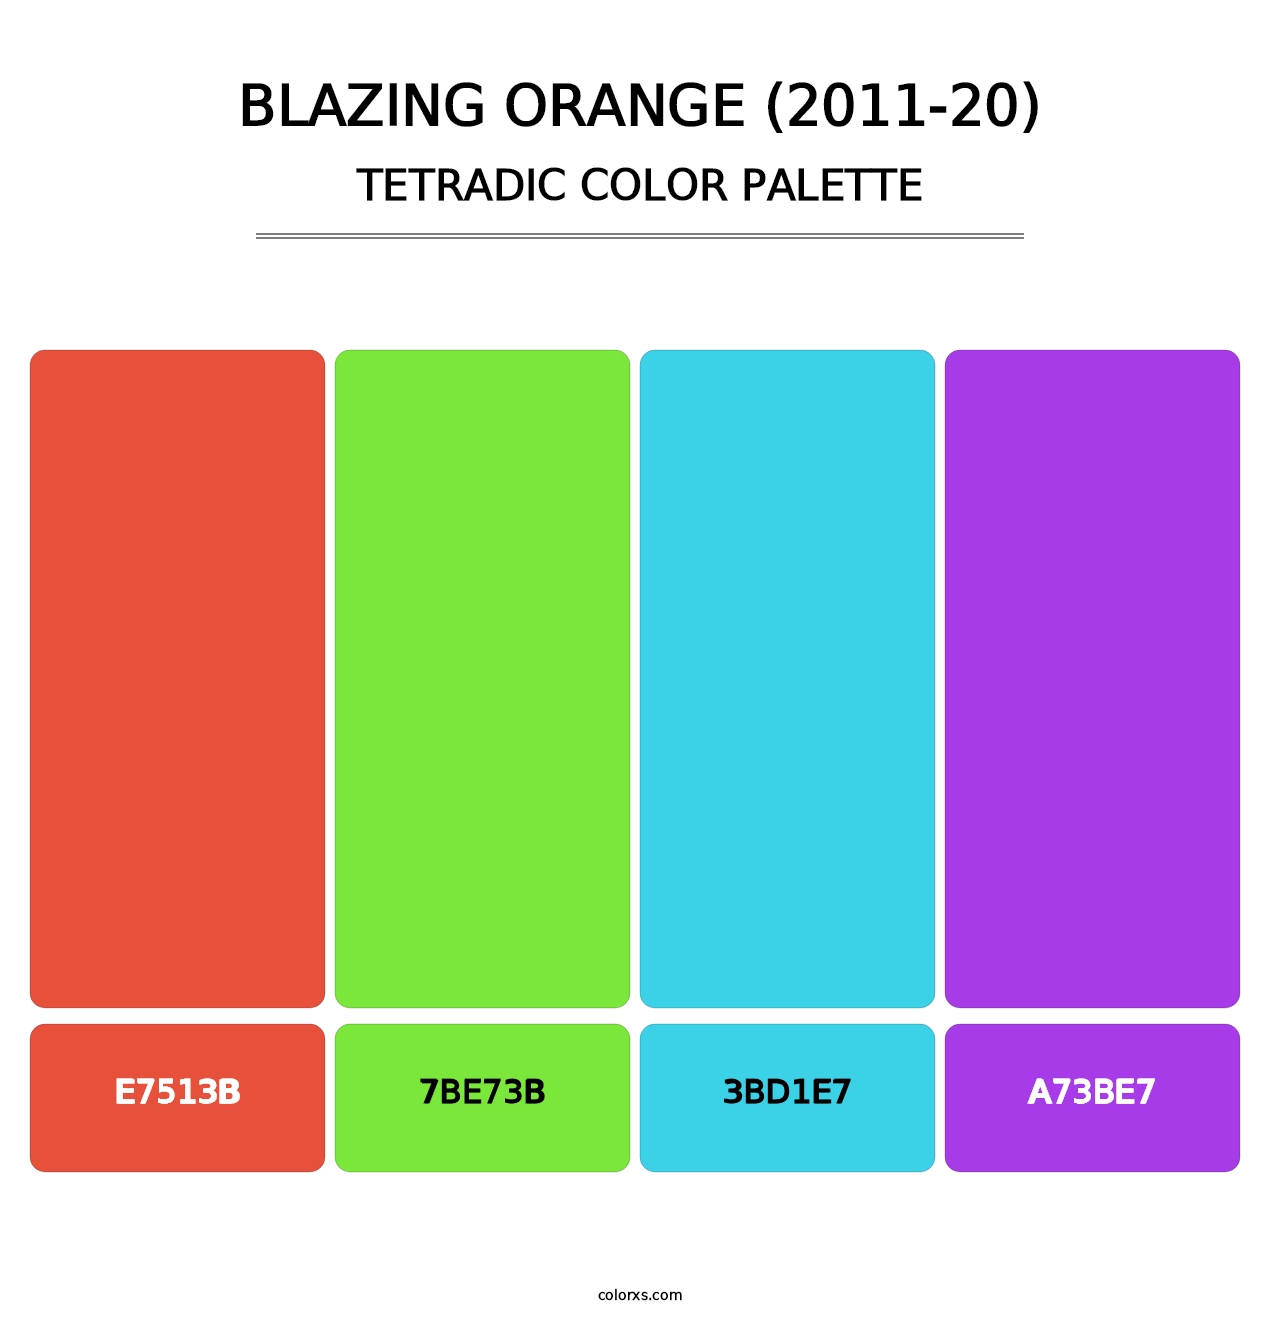 Blazing Orange (2011-20) - Tetradic Color Palette